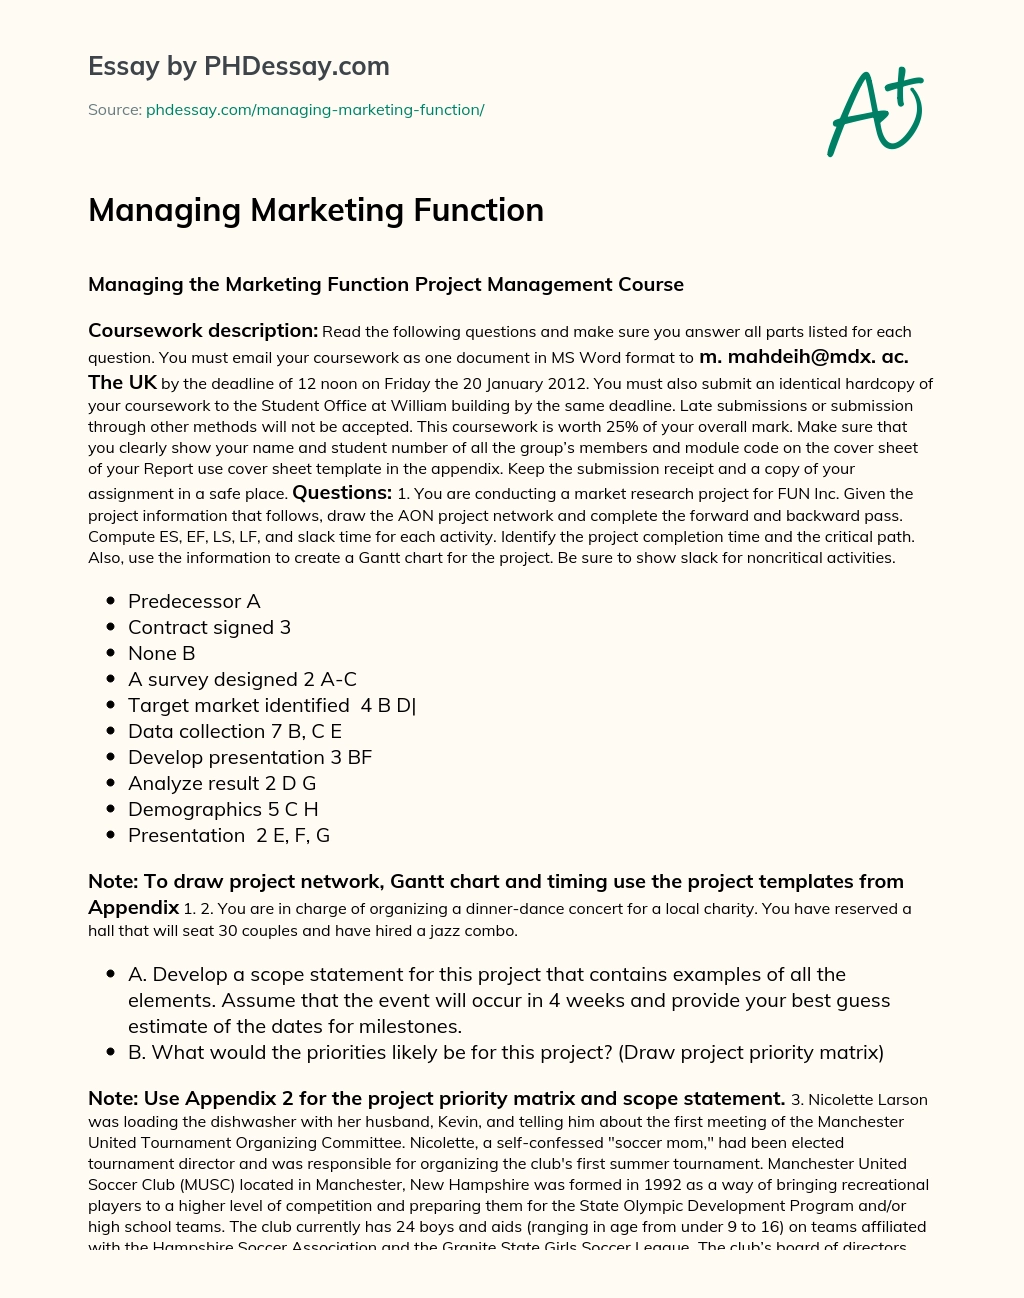 Managing Marketing Function essay